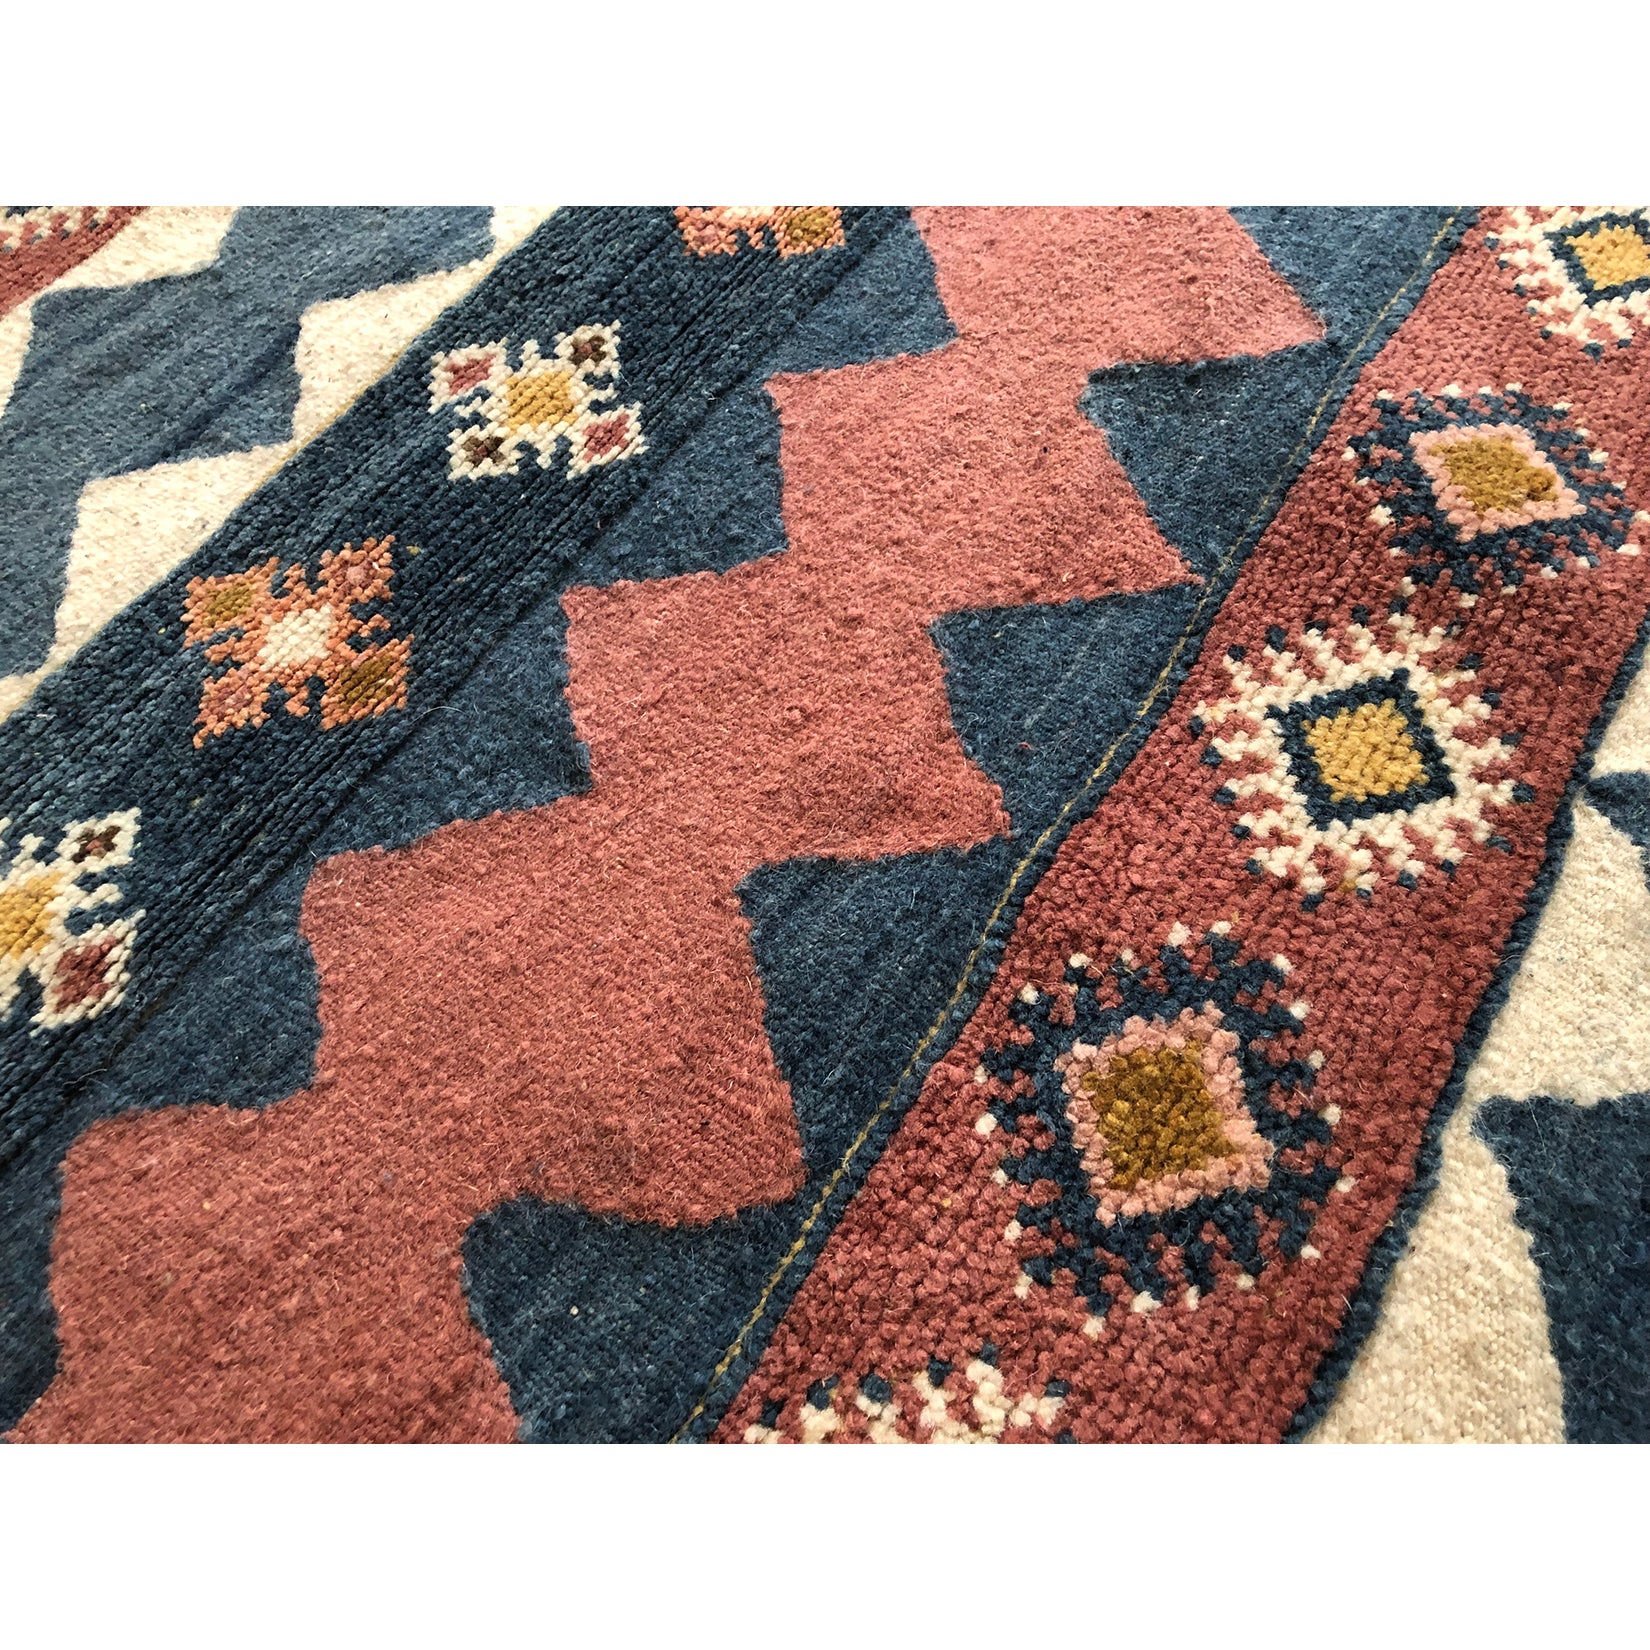 BIA - High Atlas modern Glaoui Moroccan rug - Kantara | Moroccan Rugs